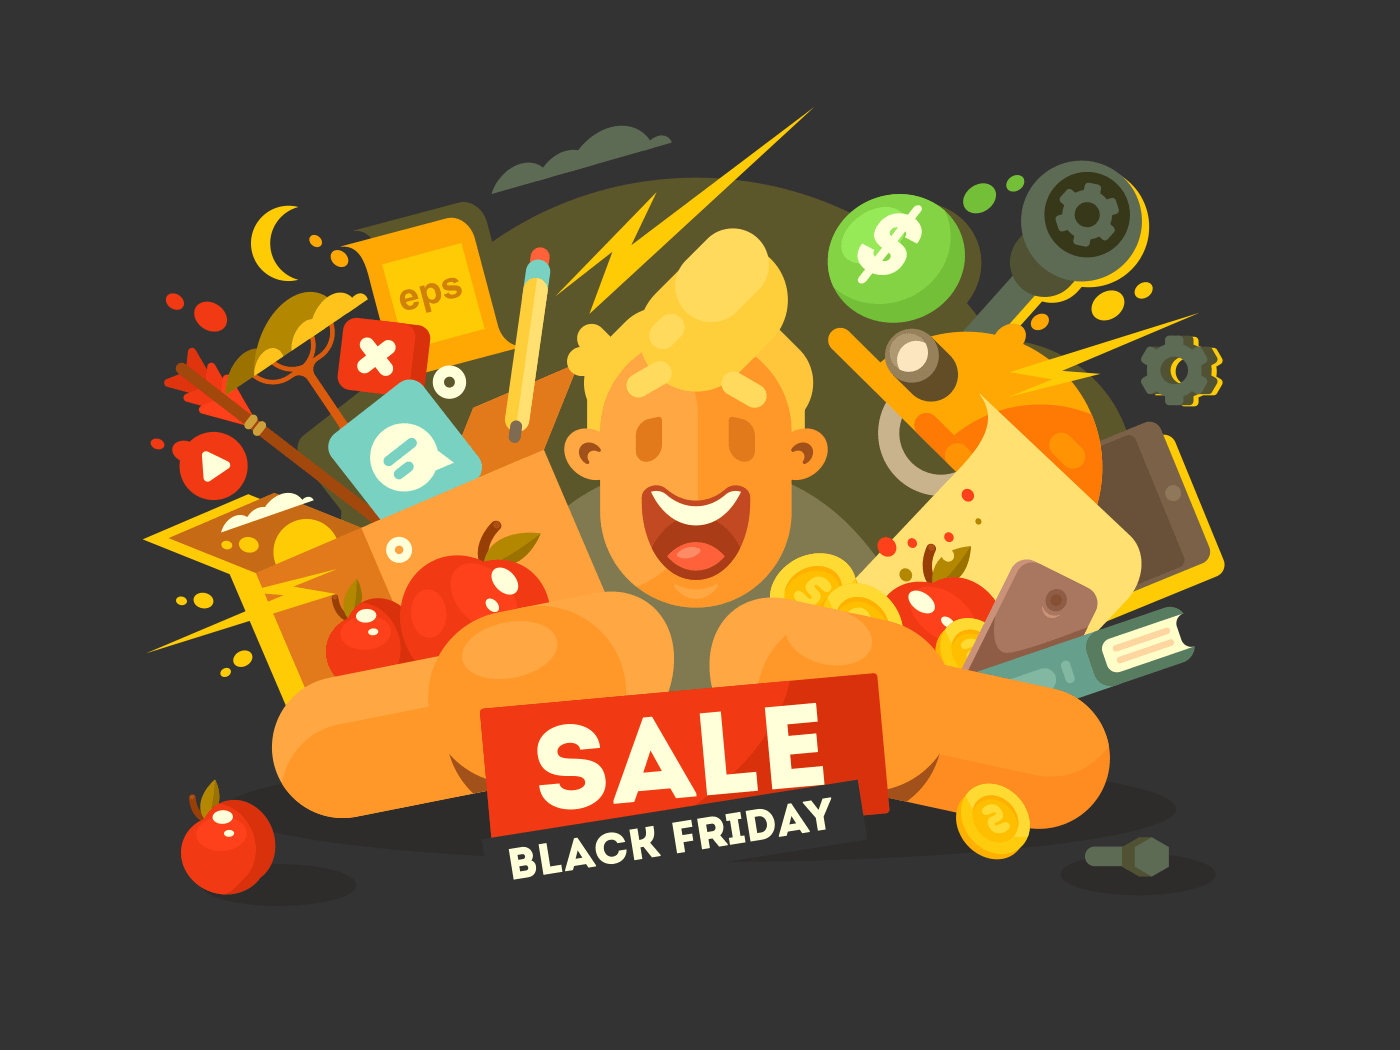 Black friday sale illustration